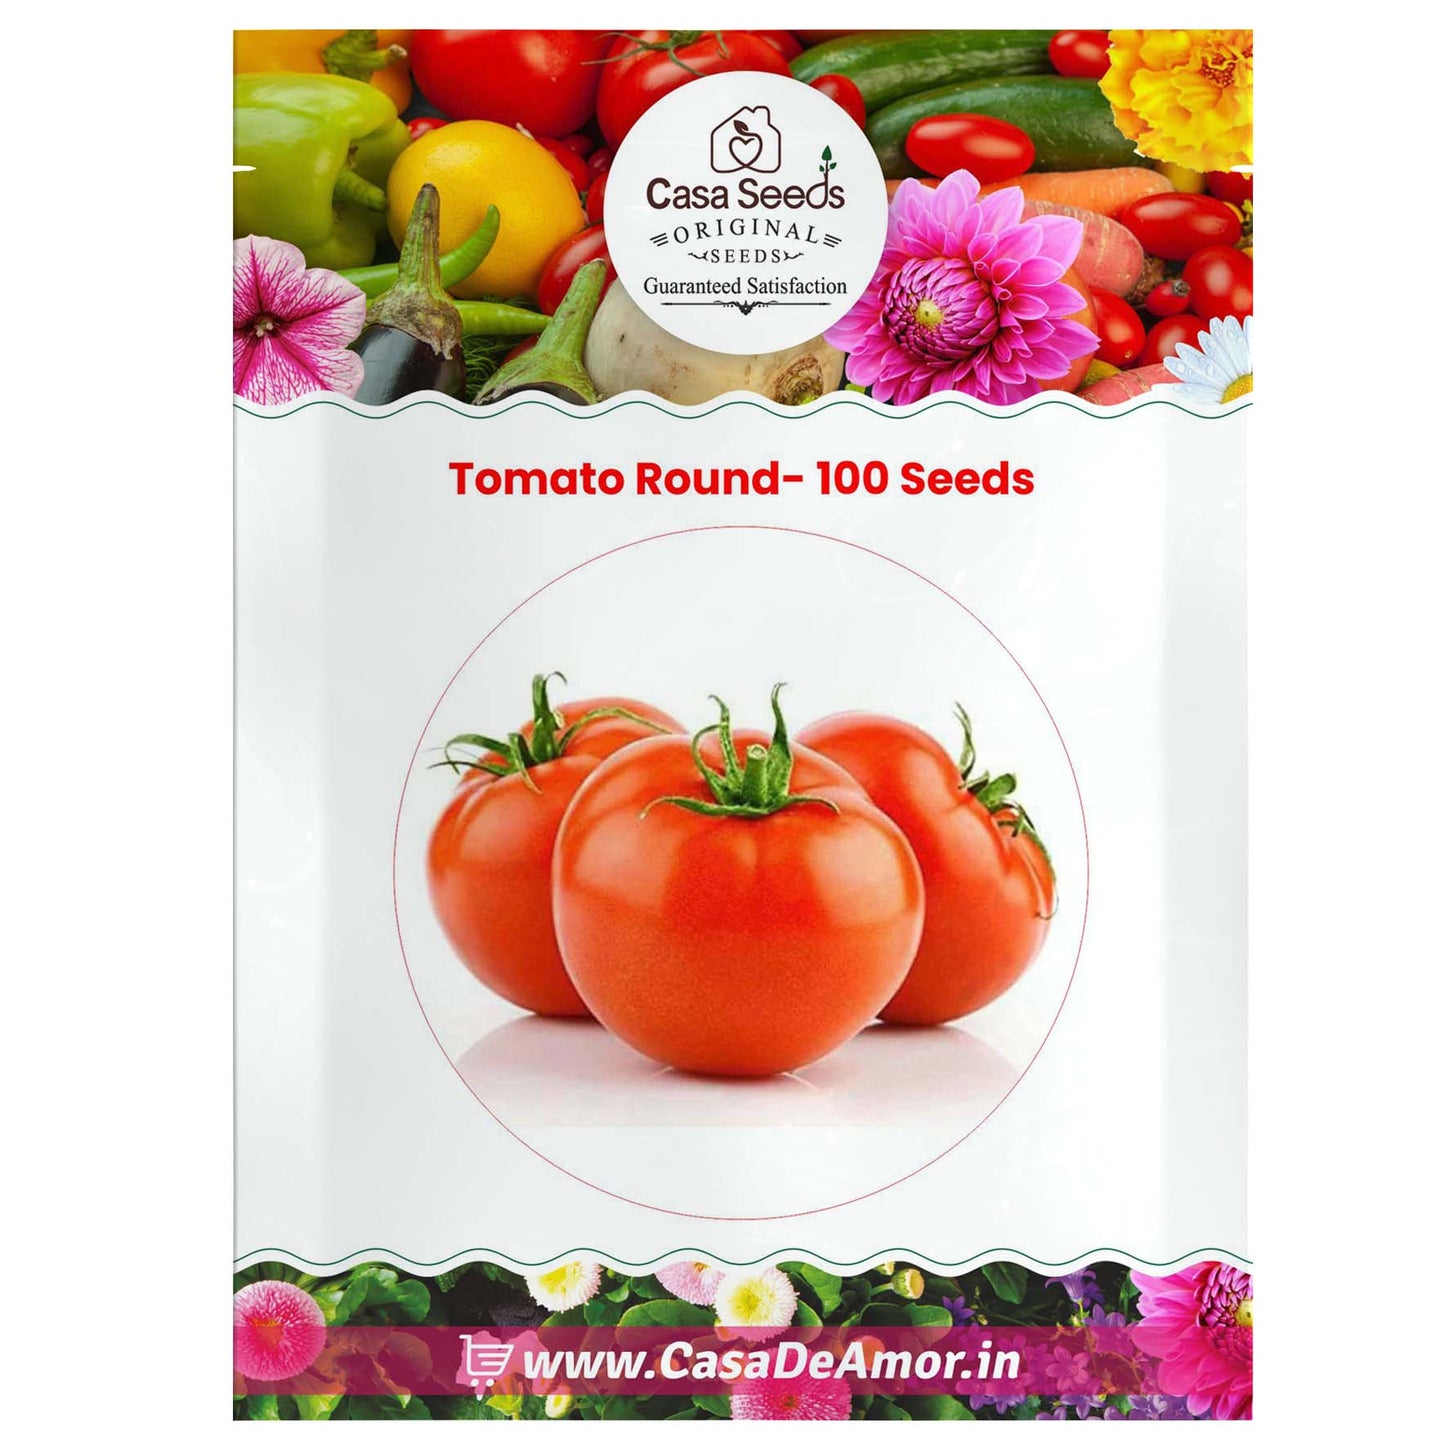 Tomato Round- 100 Seeds